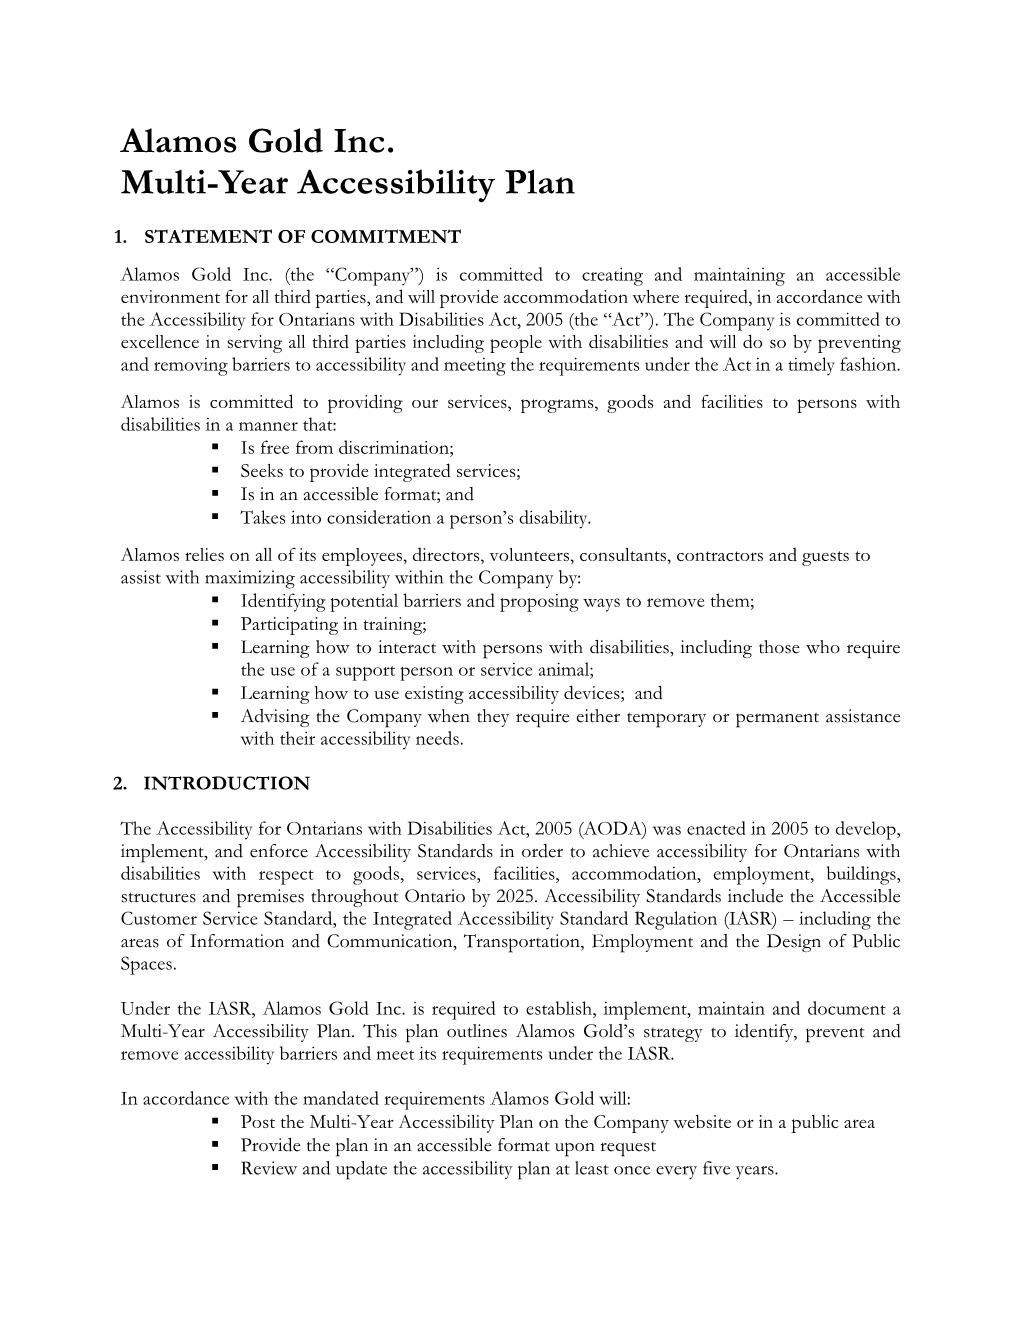 Alamos Gold Inc. Multi-Year Accessibility Plan